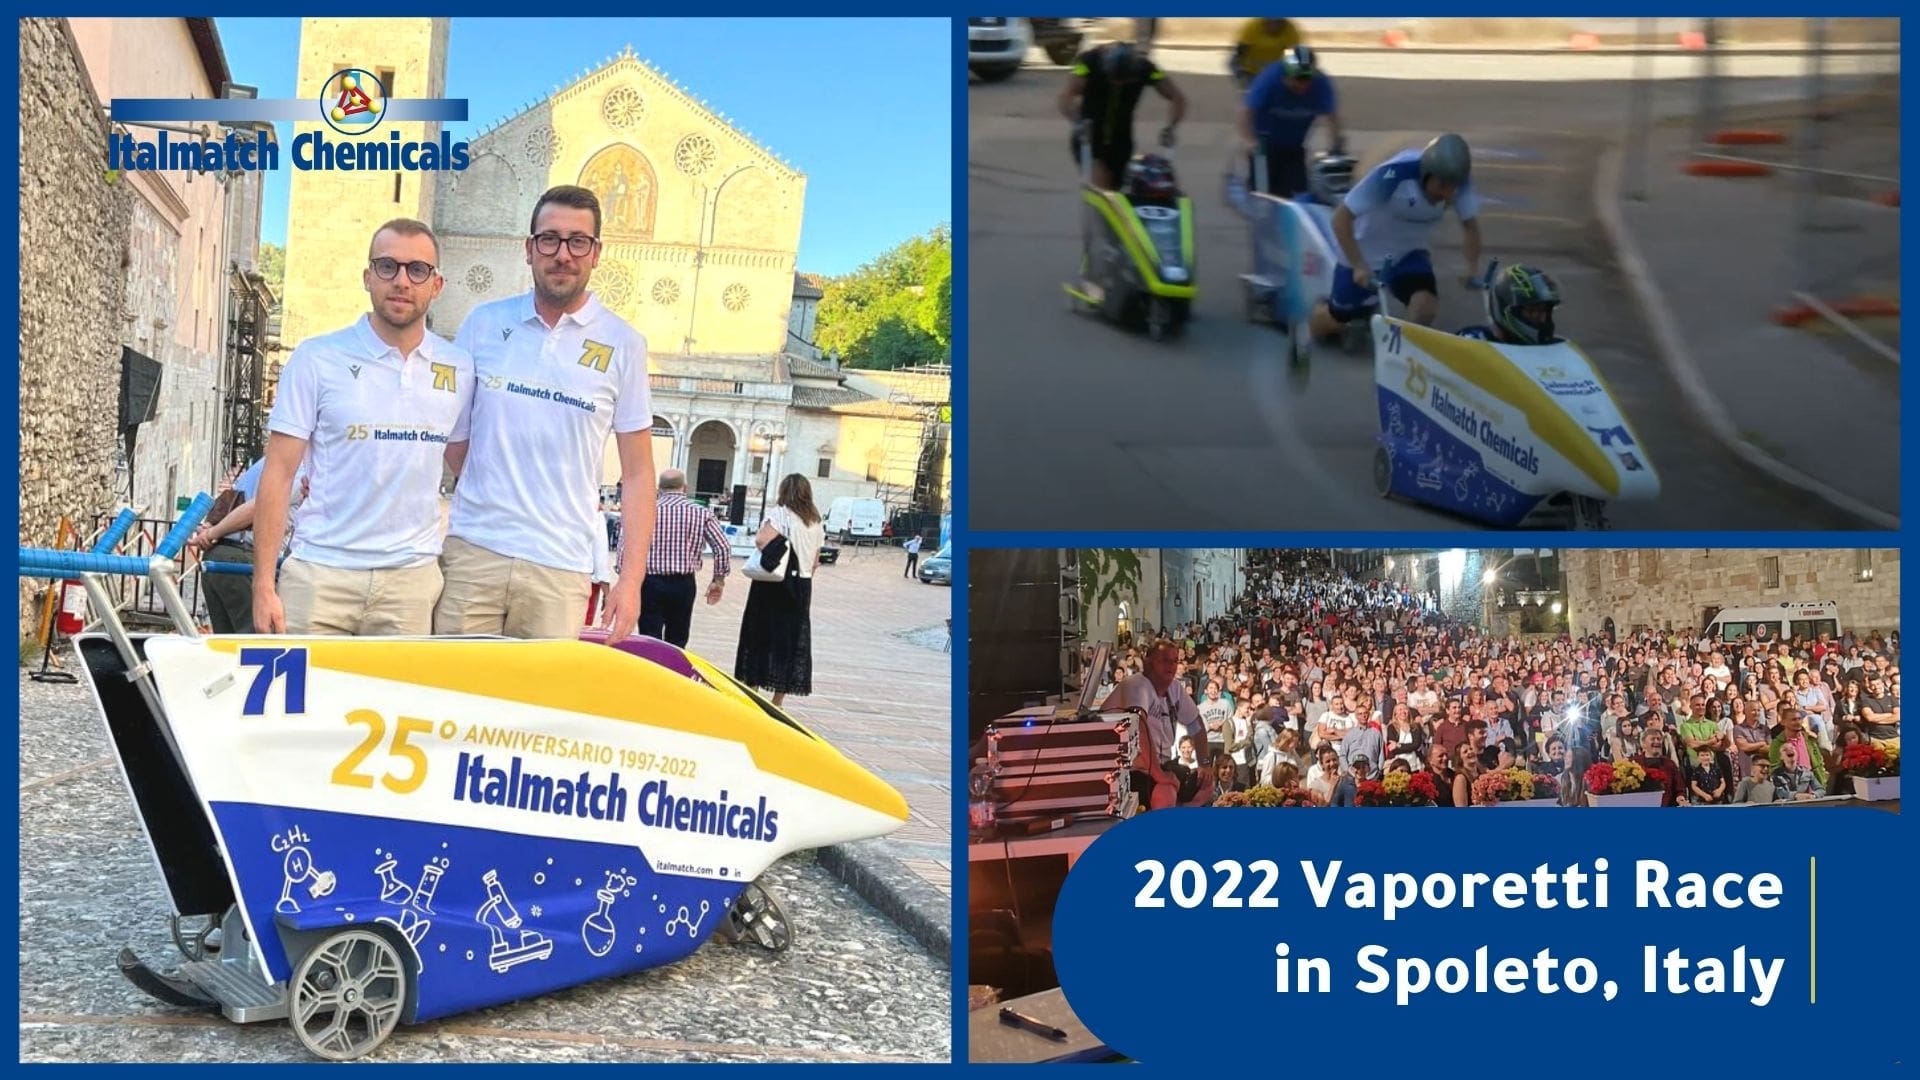 Vaporetti 2022 - Spoleto race